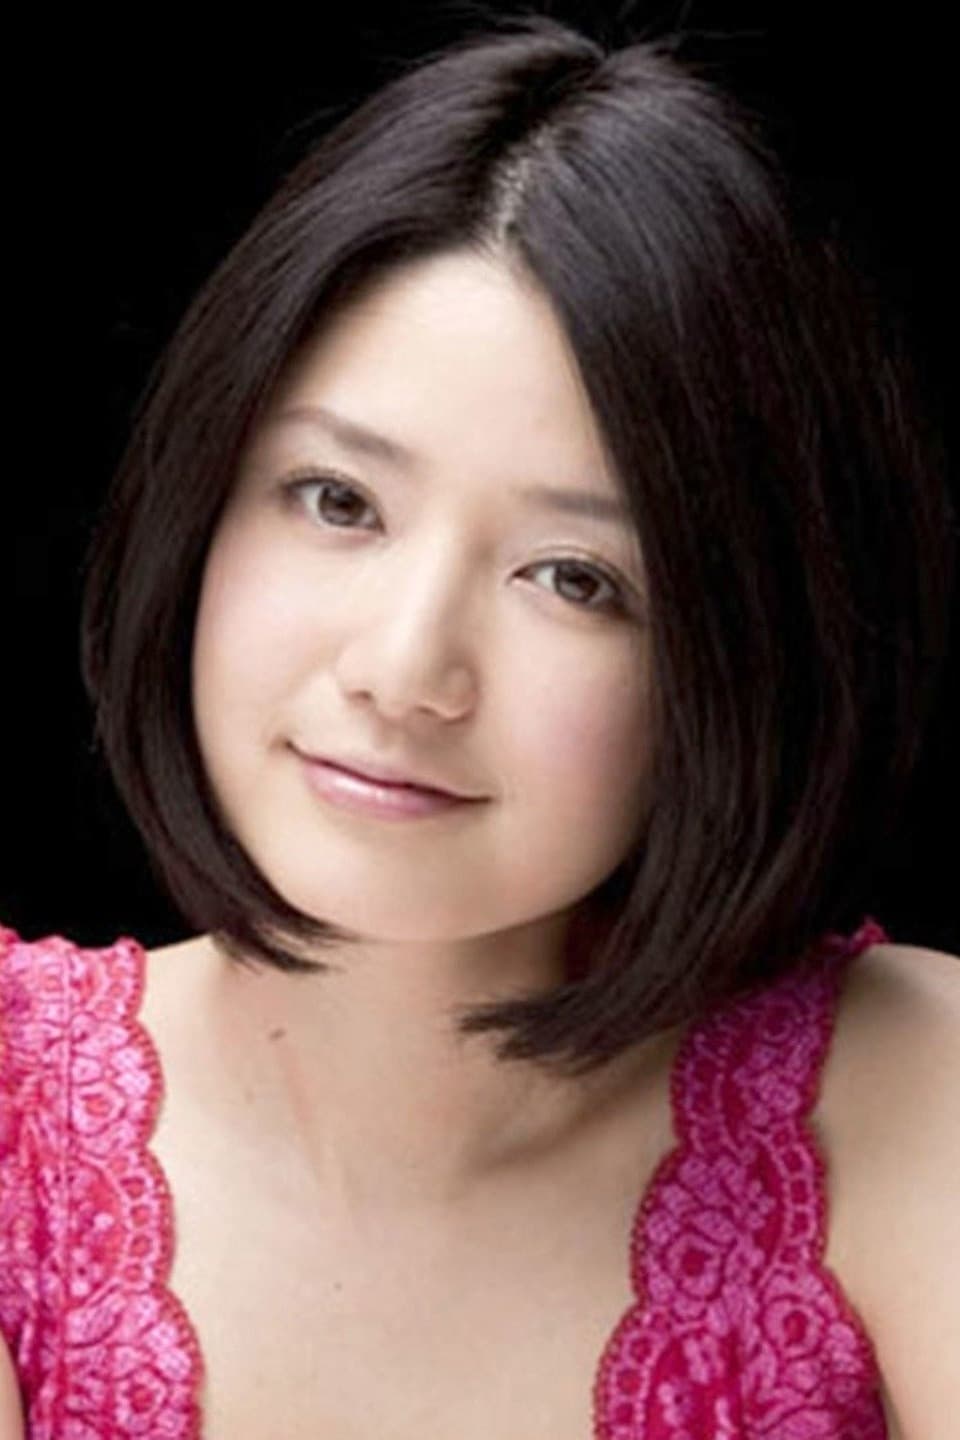 Hitomi Furusaki